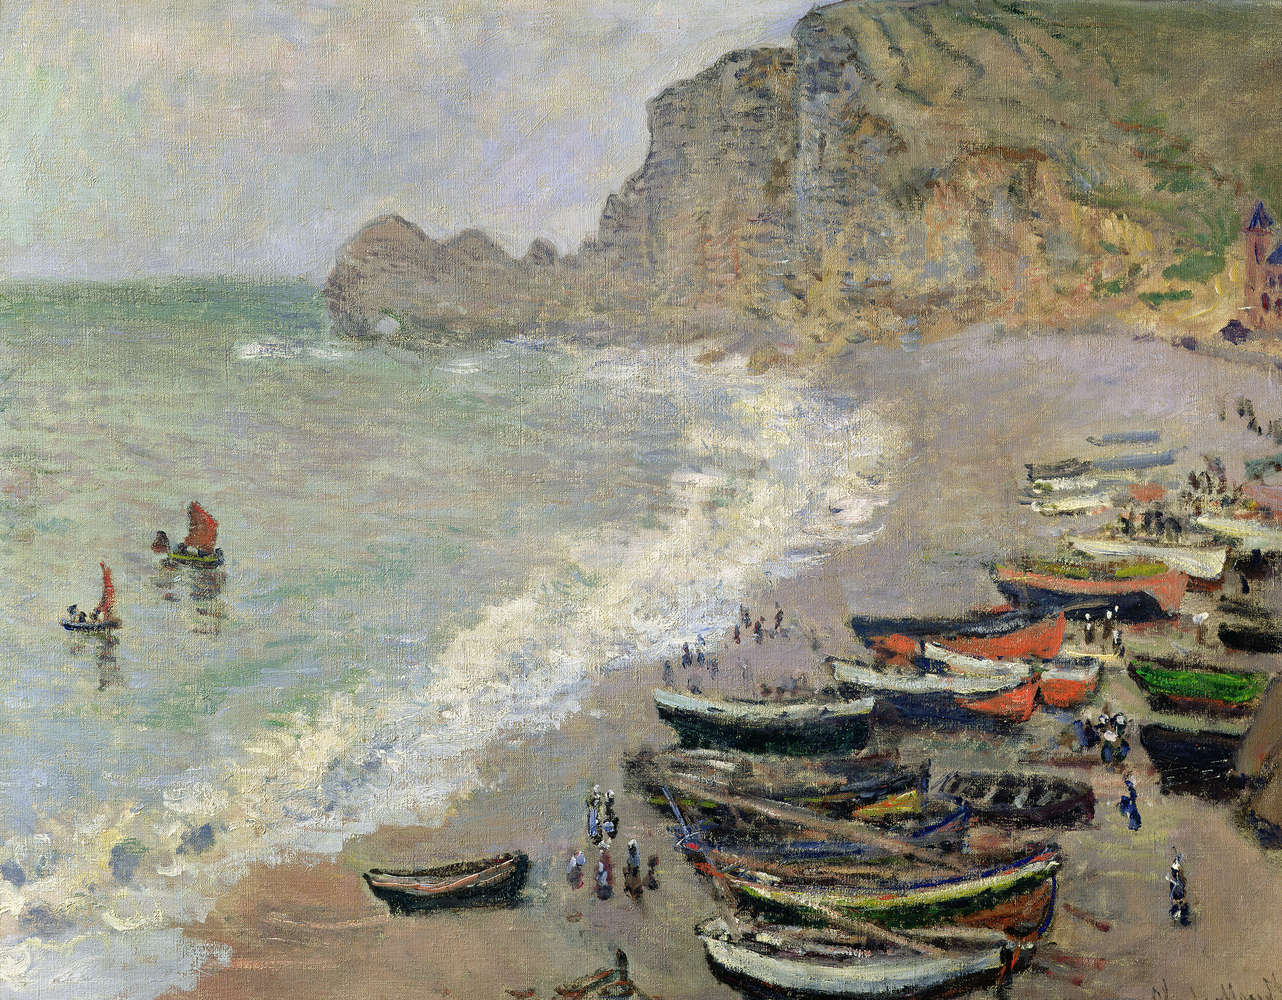             Photo wallpaper "Etretat, beach and the Porte d'Amont" by Claude Monet
        